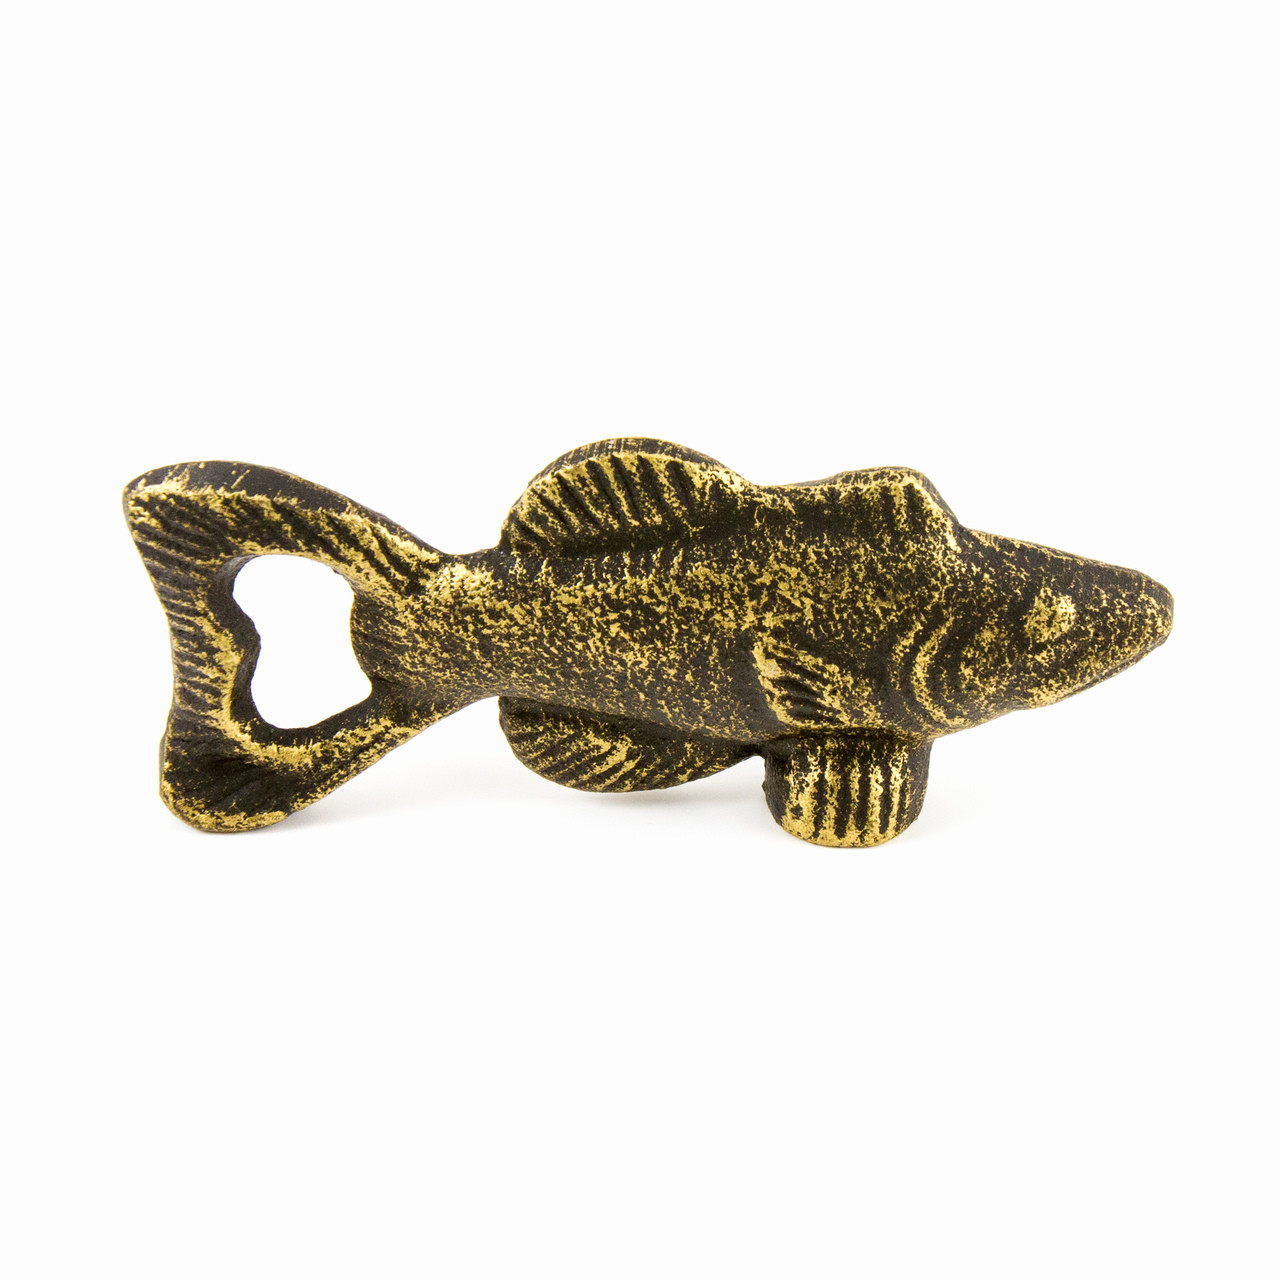 https://cdn11.bigcommerce.com/s-itgcdyg/images/stencil/1280x1280/products/1684/14521/WMS-k10789-Rustic-Gold-cast-iron-fish-bottle-opener-decor-1__61725.1514678147.jpg?c=2